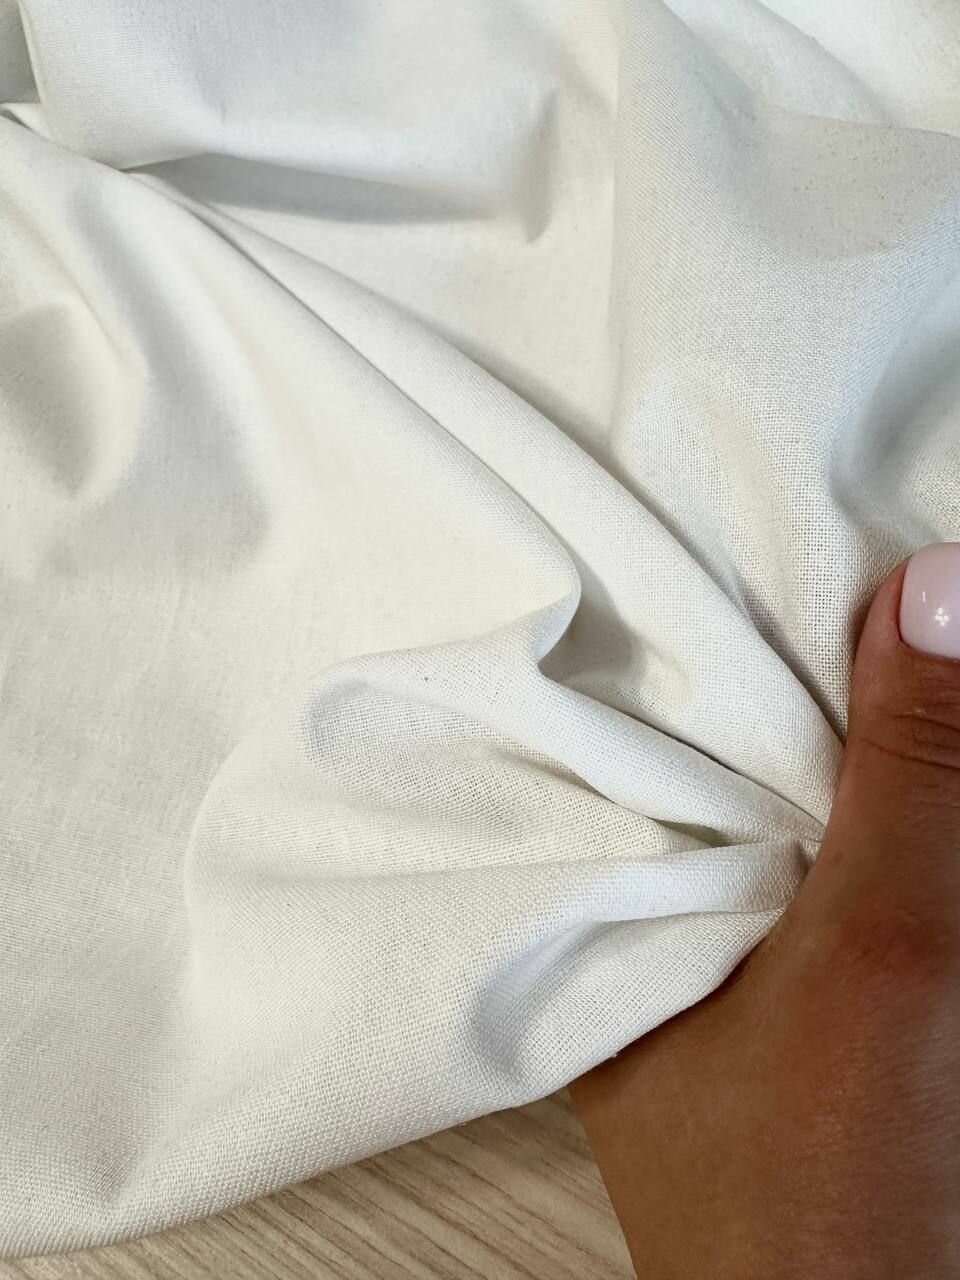 1 м. Лён ткань для шитья одежды, белый. Полулен. Отрез 100х150см.